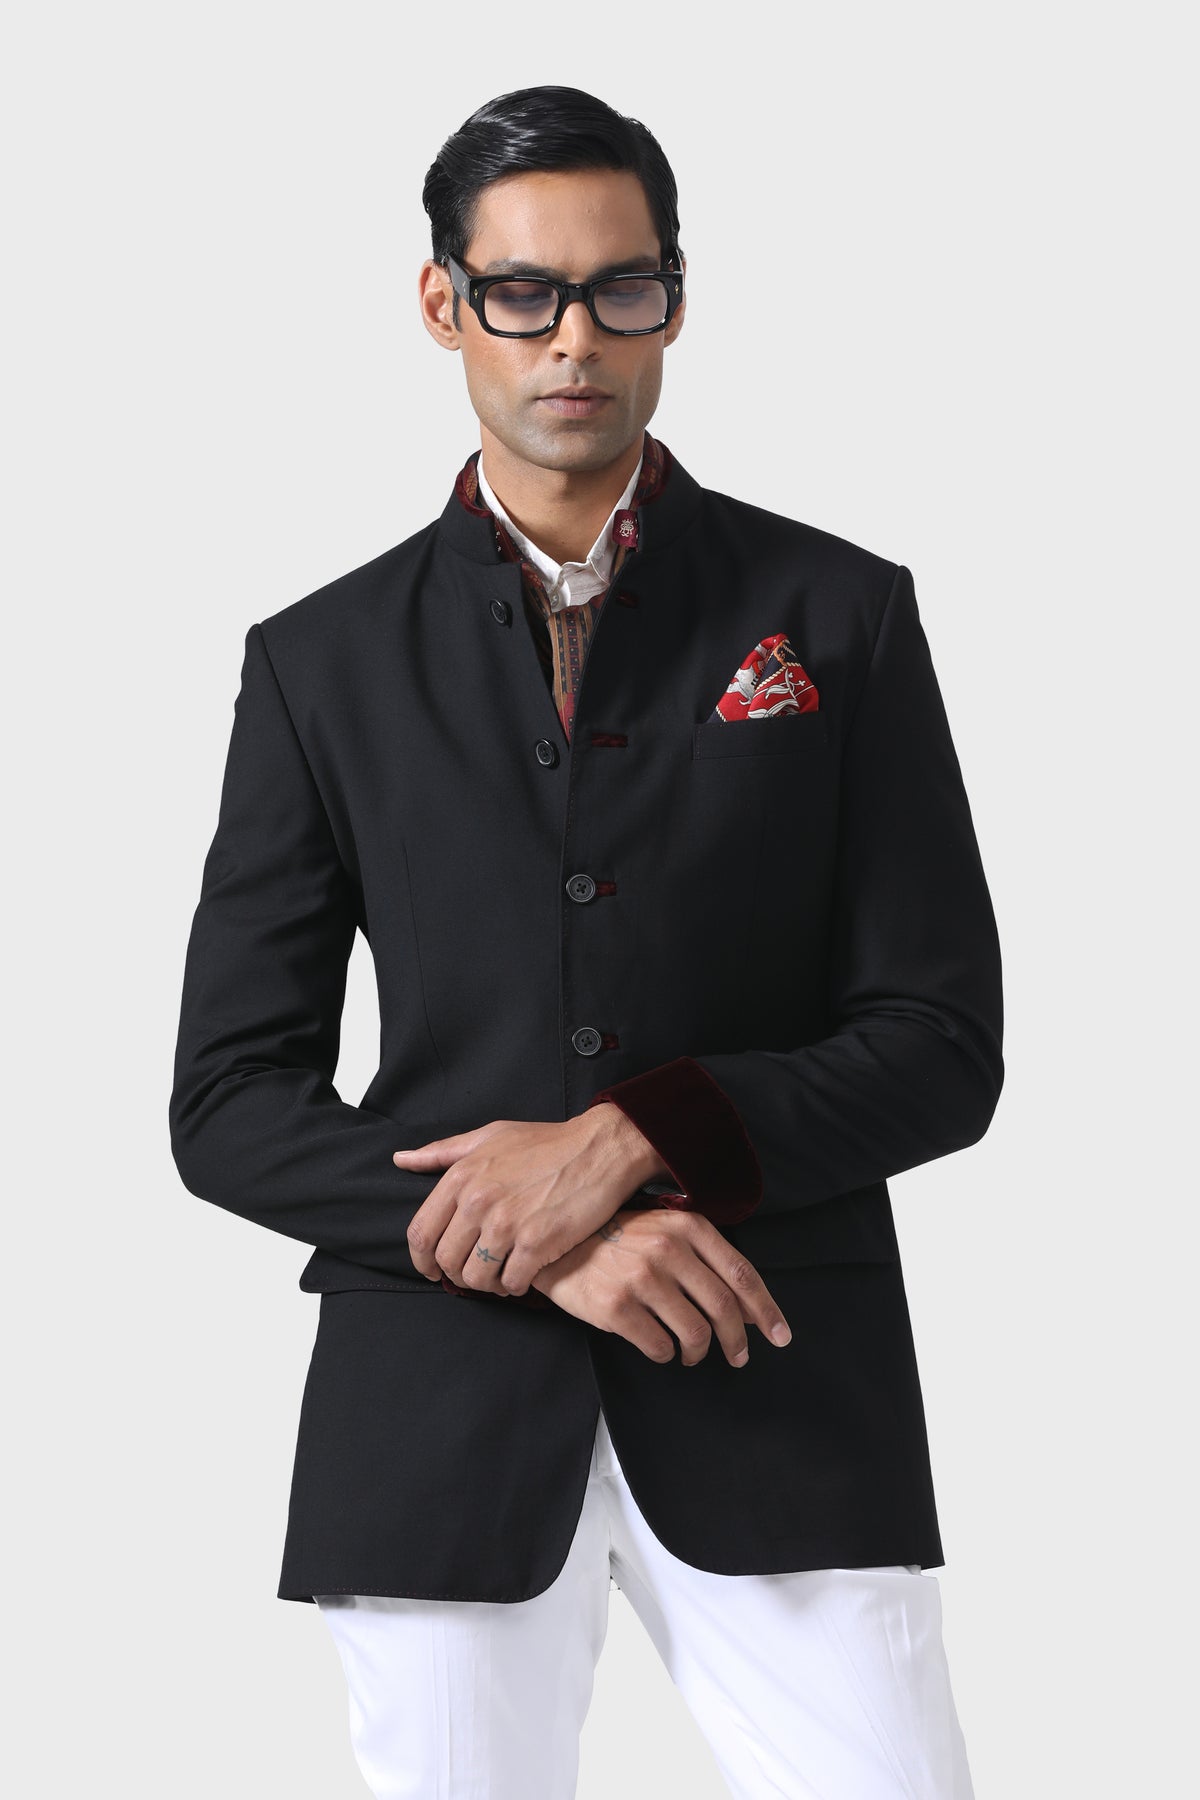 Elegant Handmade Bandhgala Black Jacket